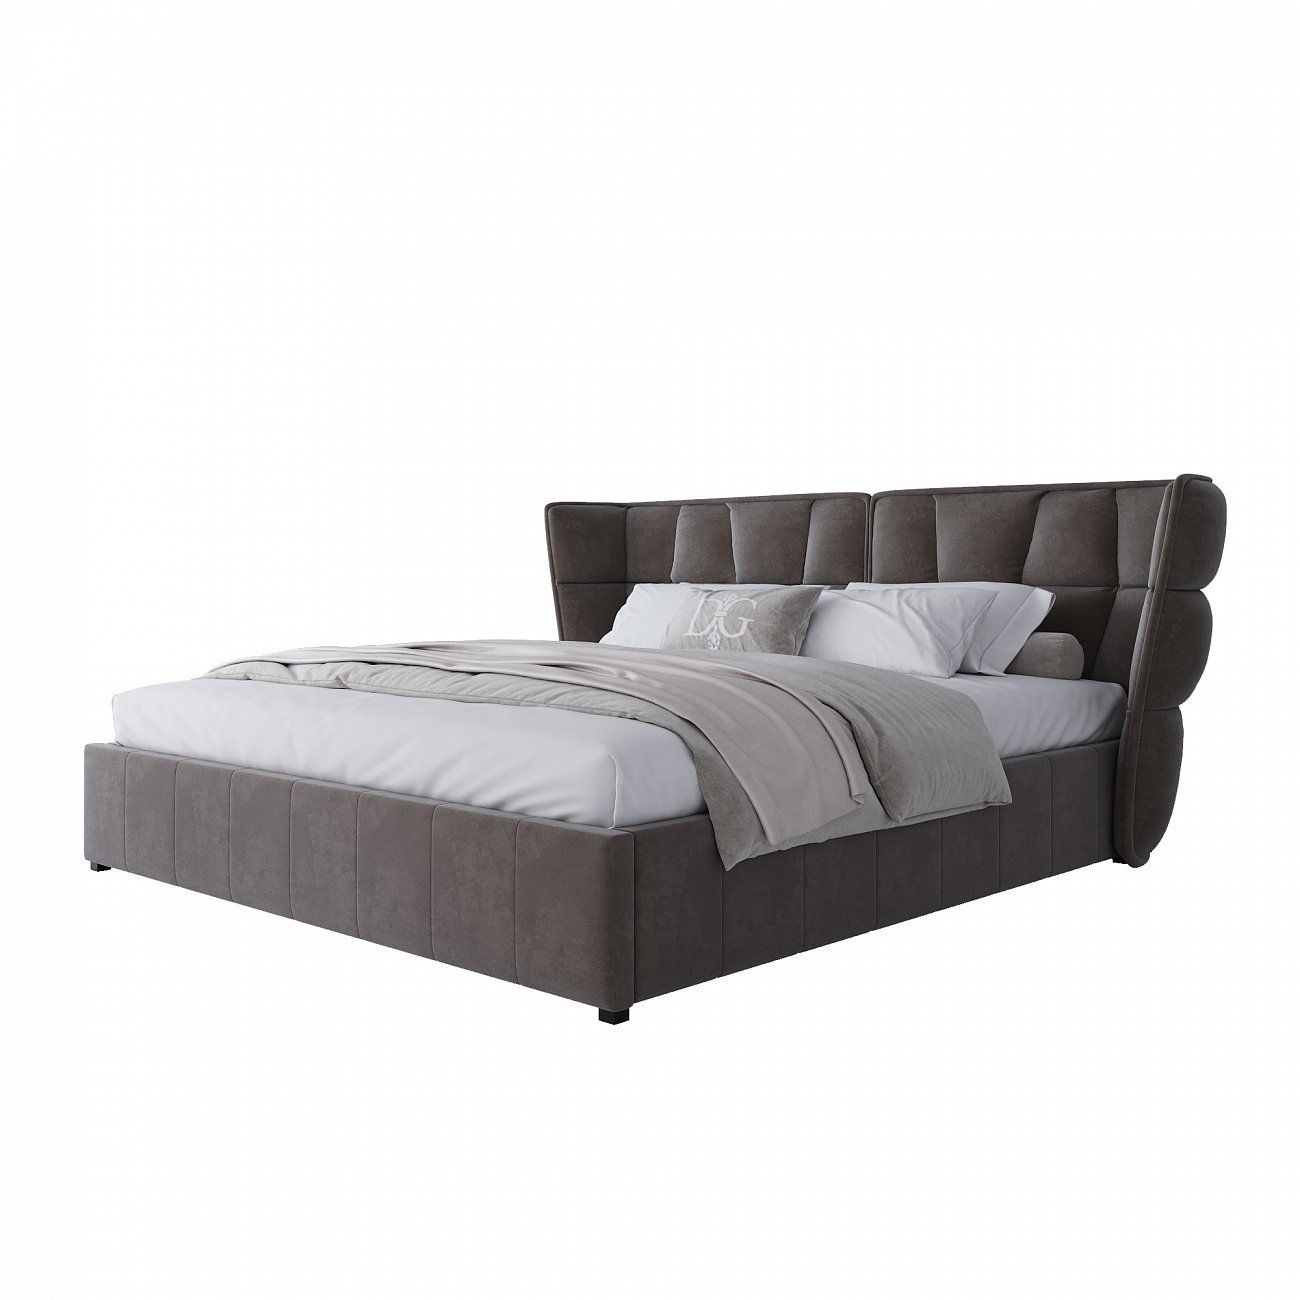 Double bed 200x200 cm grey Husk